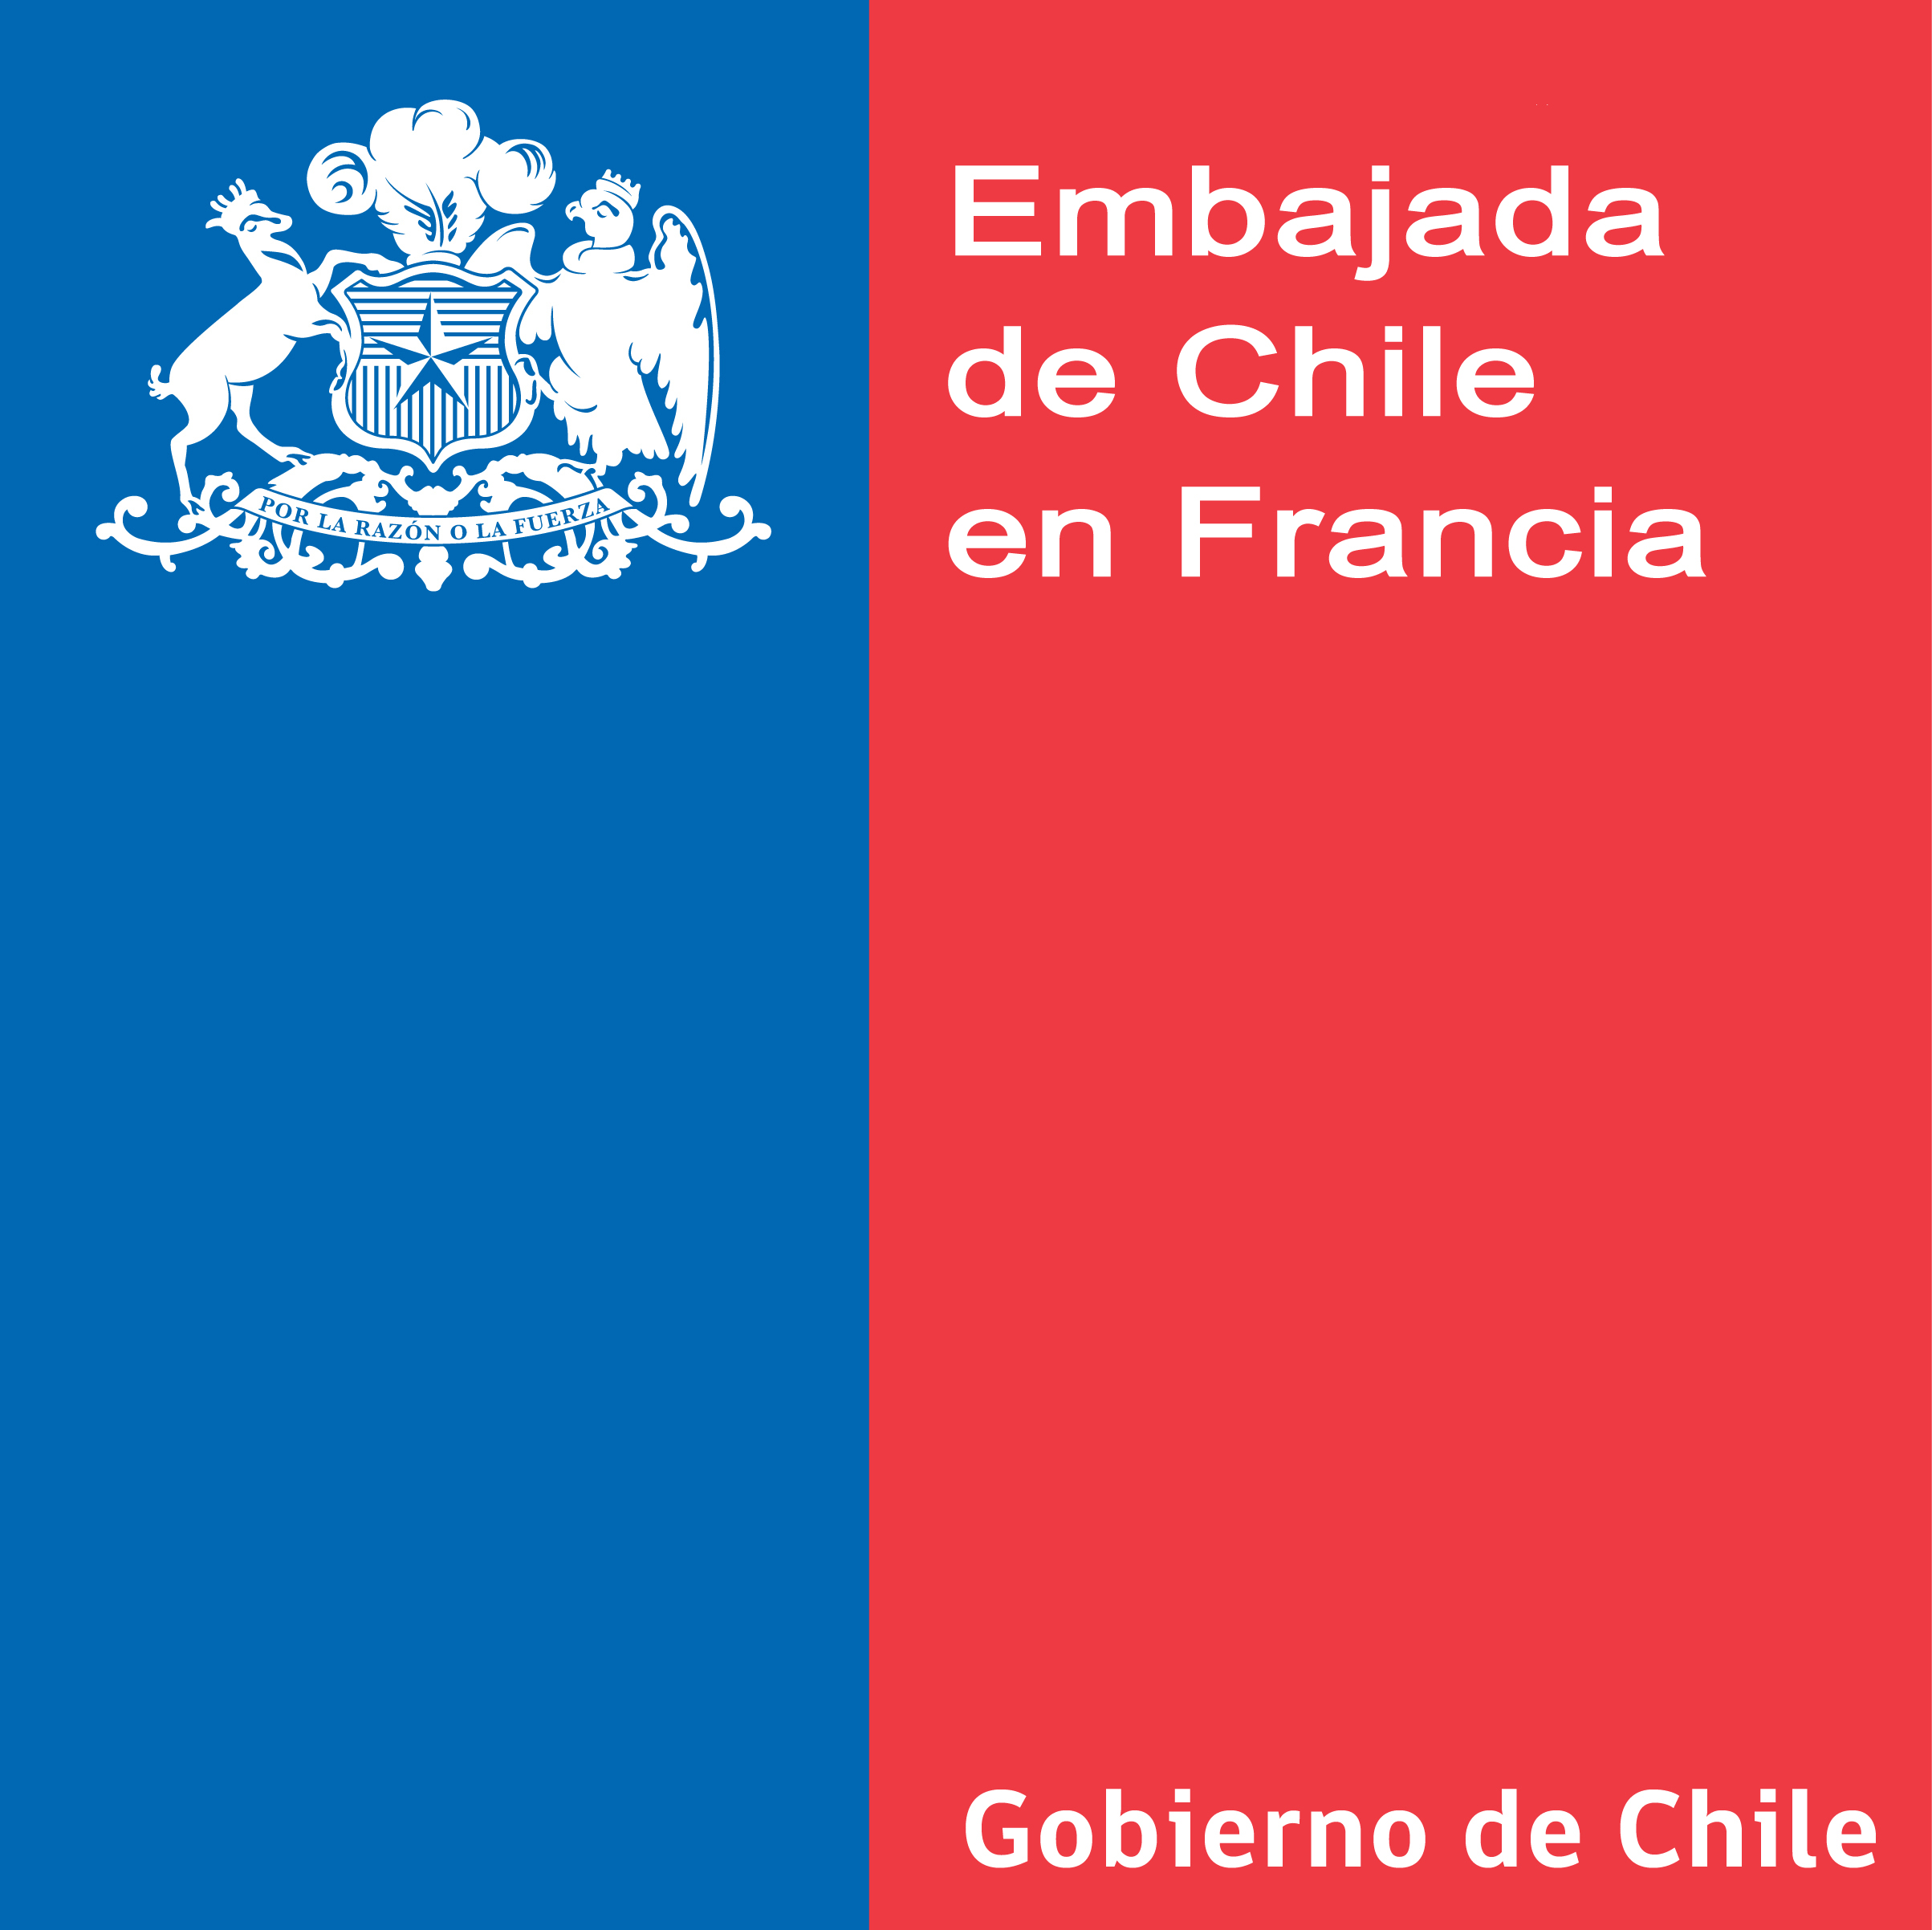 Ambassade du Chili en France